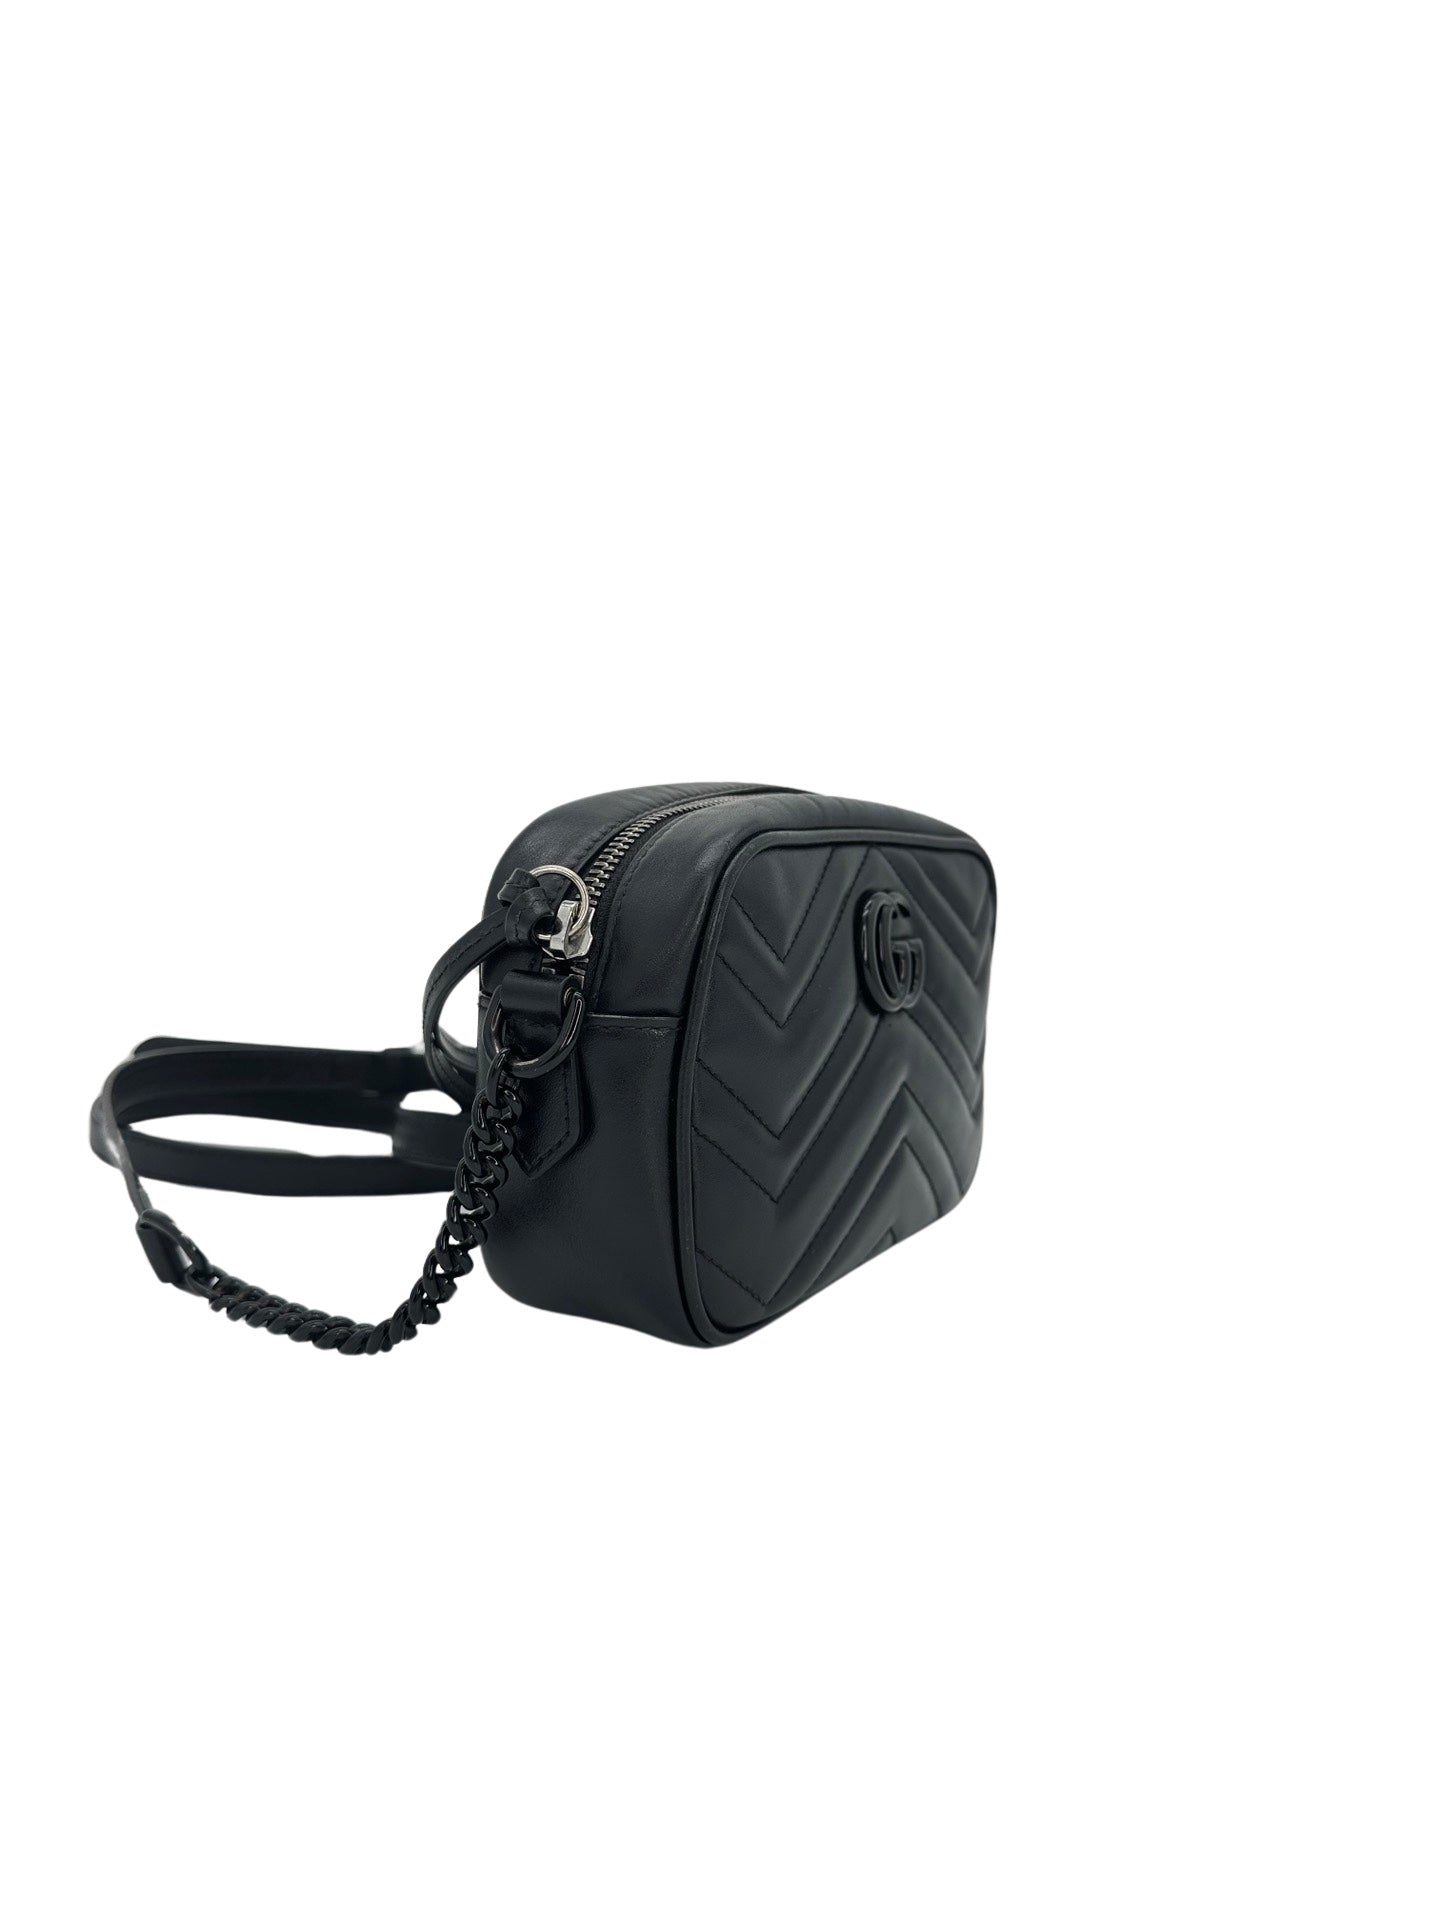 Gucci GG Marmont Mini Crossbody Bag Black Leather